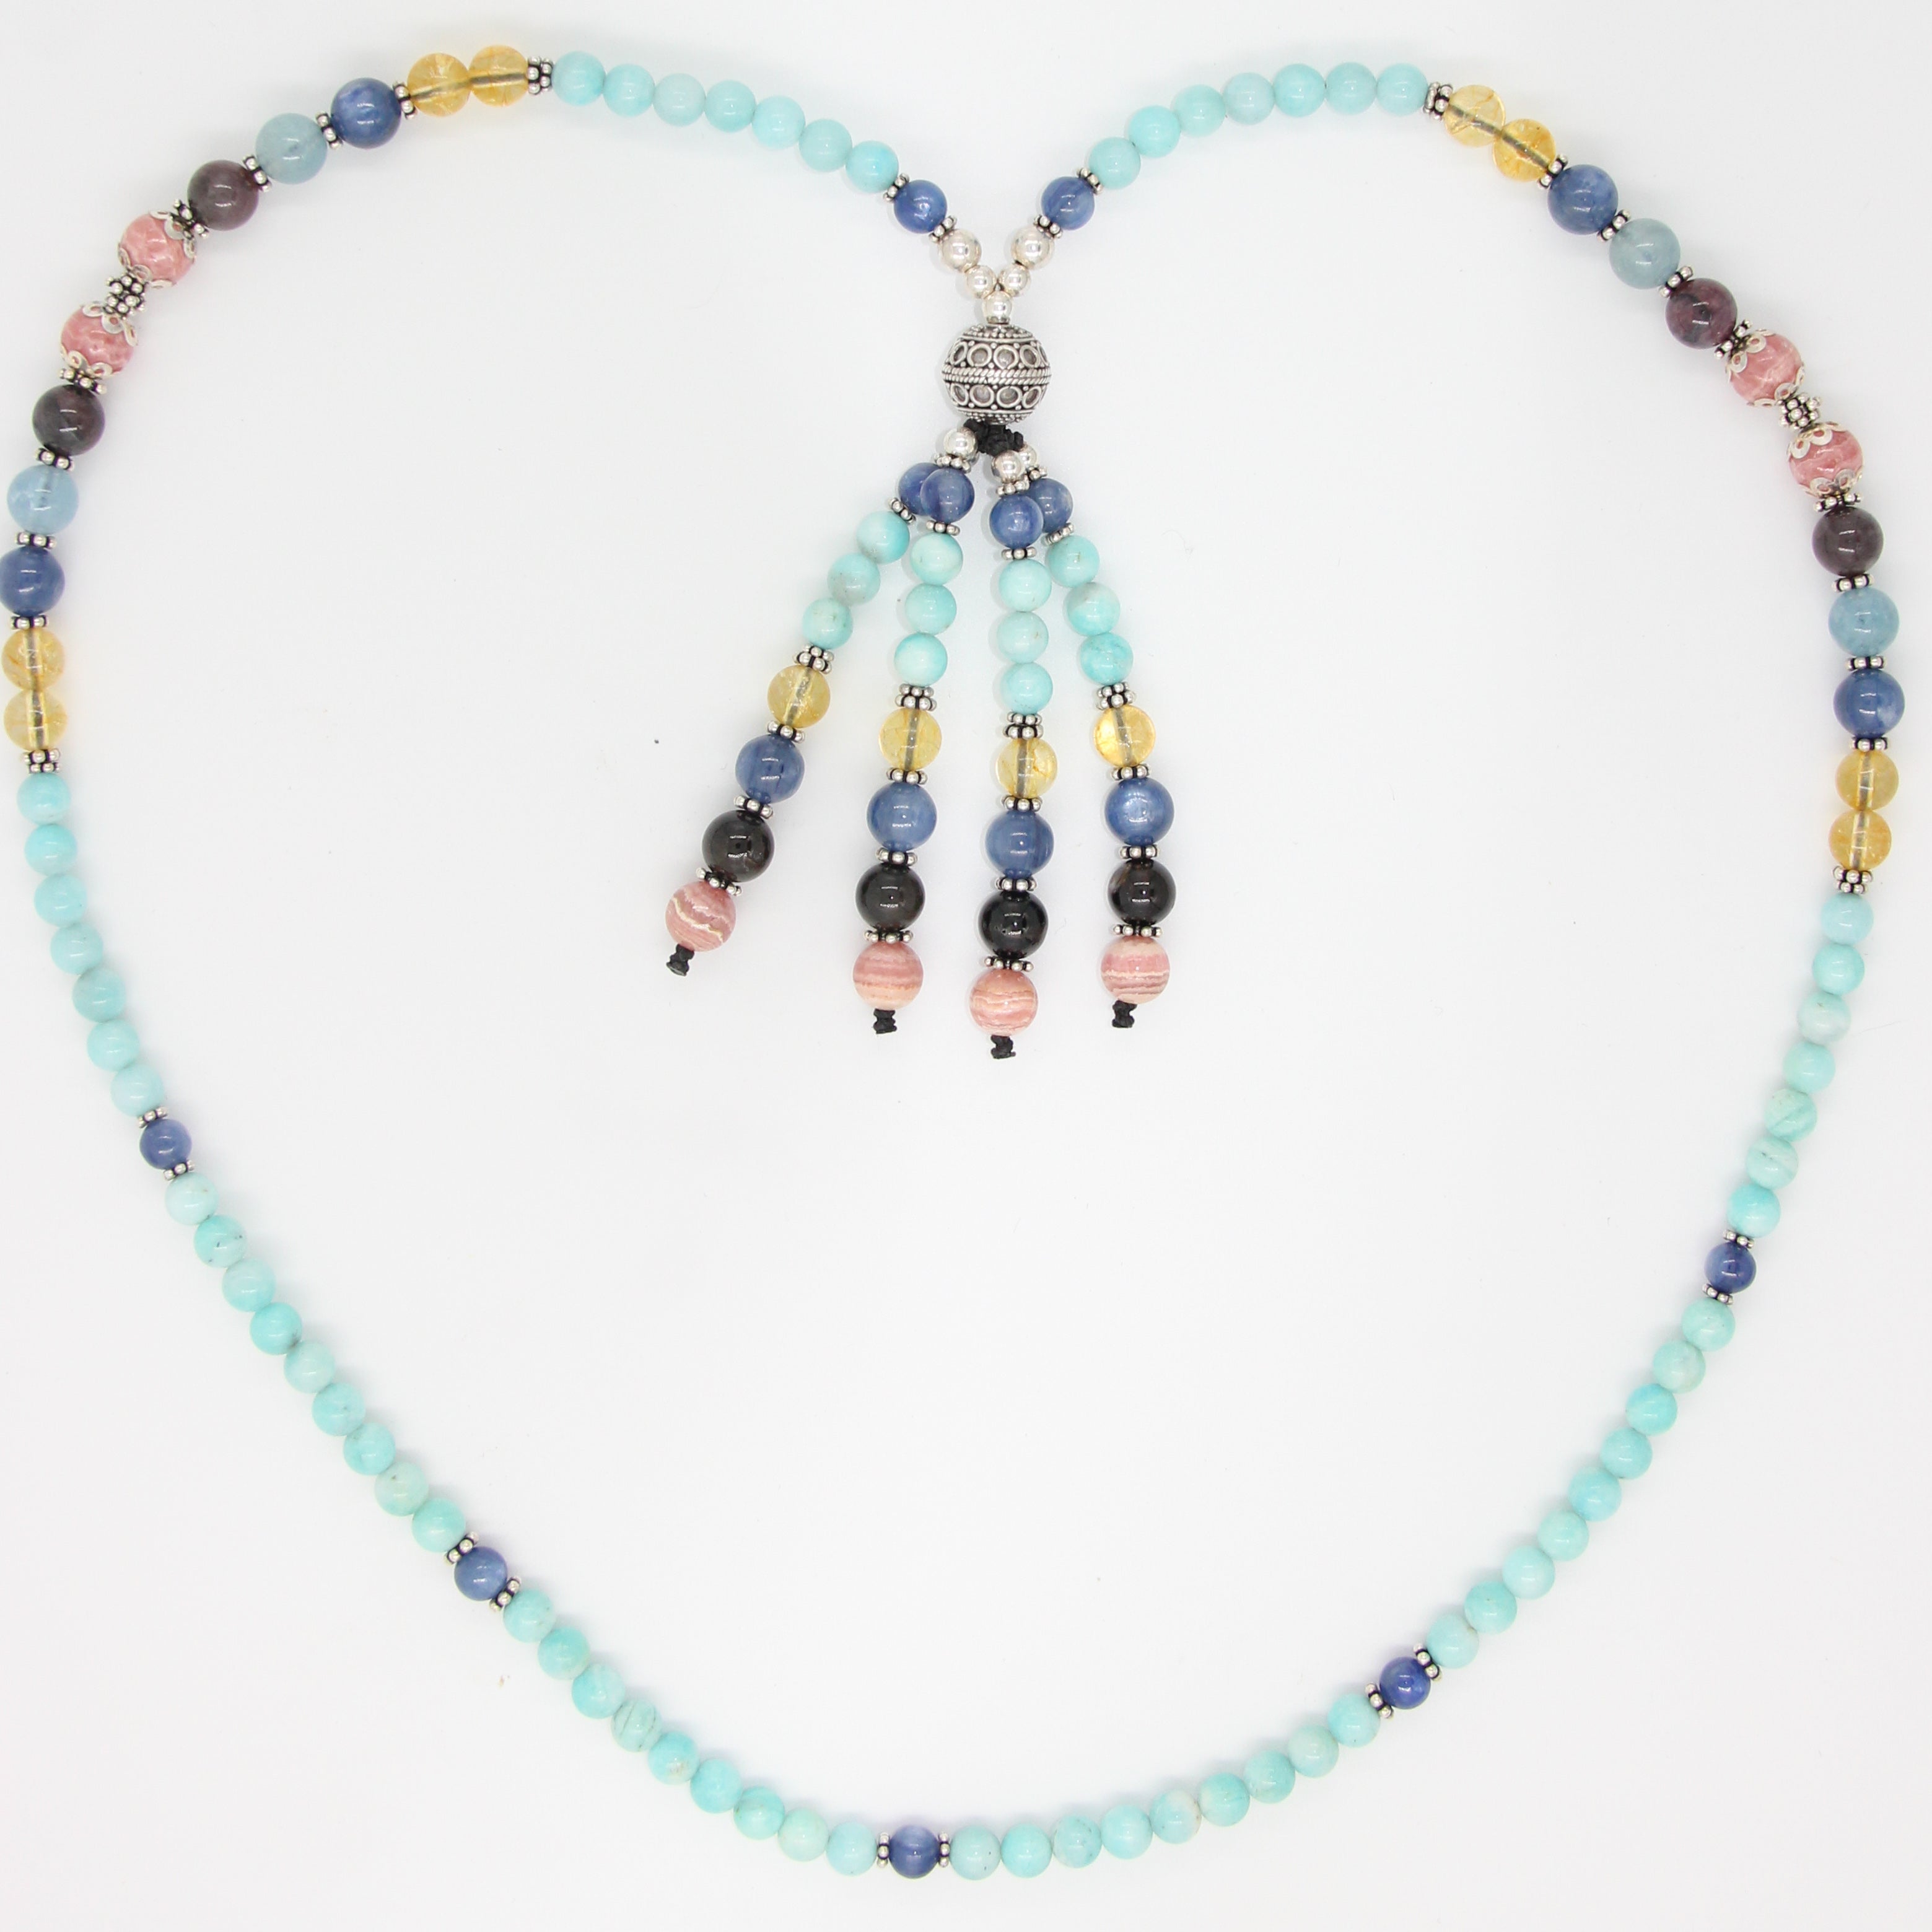 Amazonite Beads Necklace with Citrine, Aquamarine, Rhodochrosite, Tourmaline, Kyanite and Silver Beads